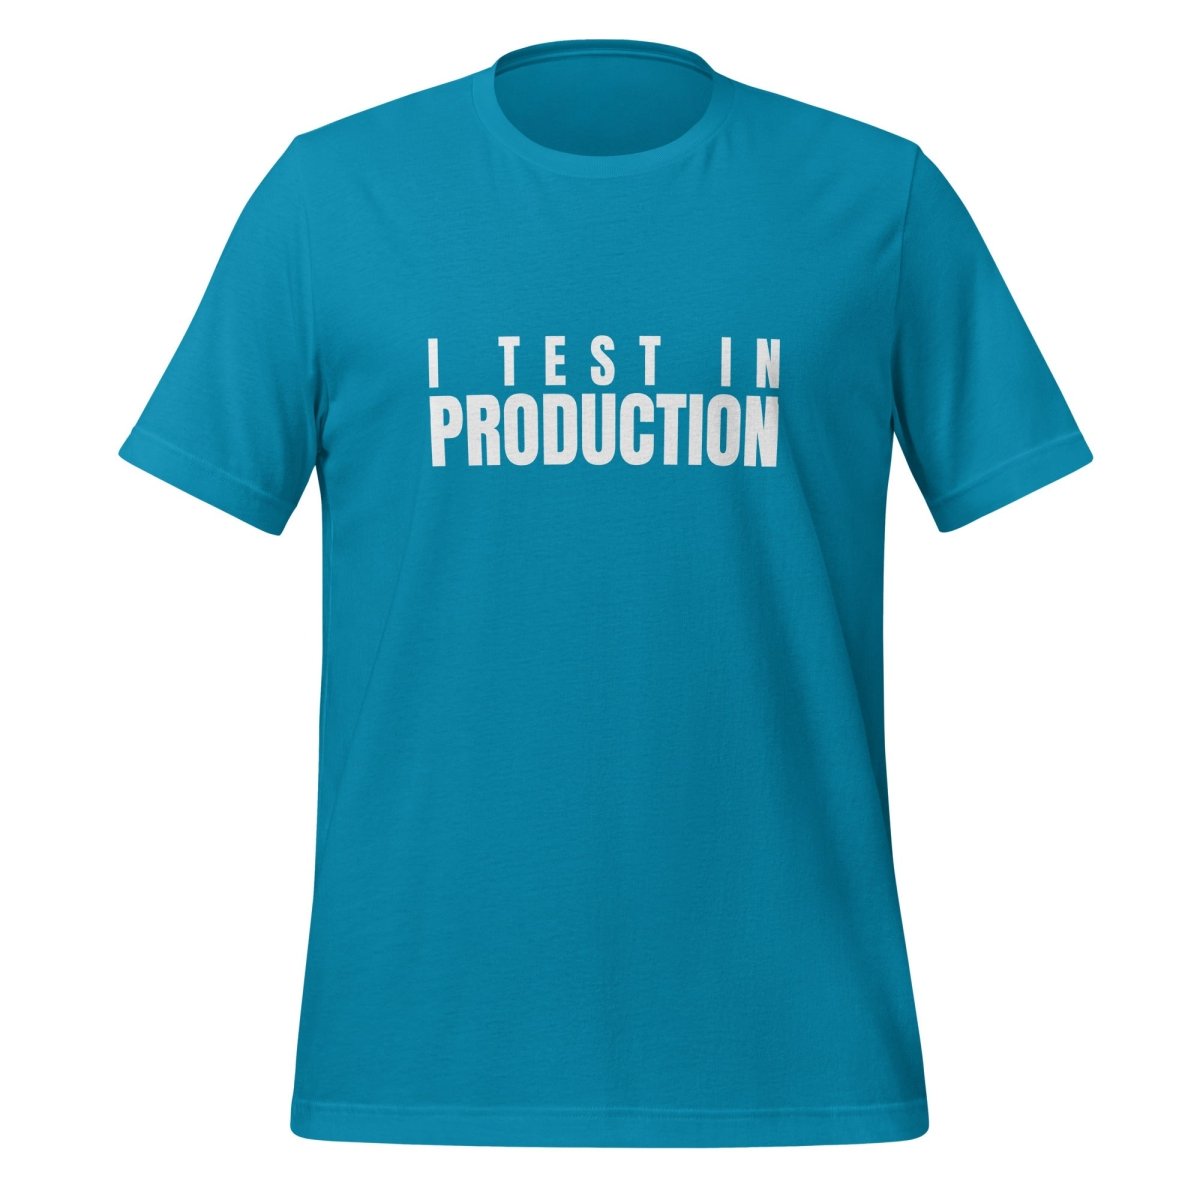 I Test in Production T - Shirt (unisex) - Aqua - AI Store